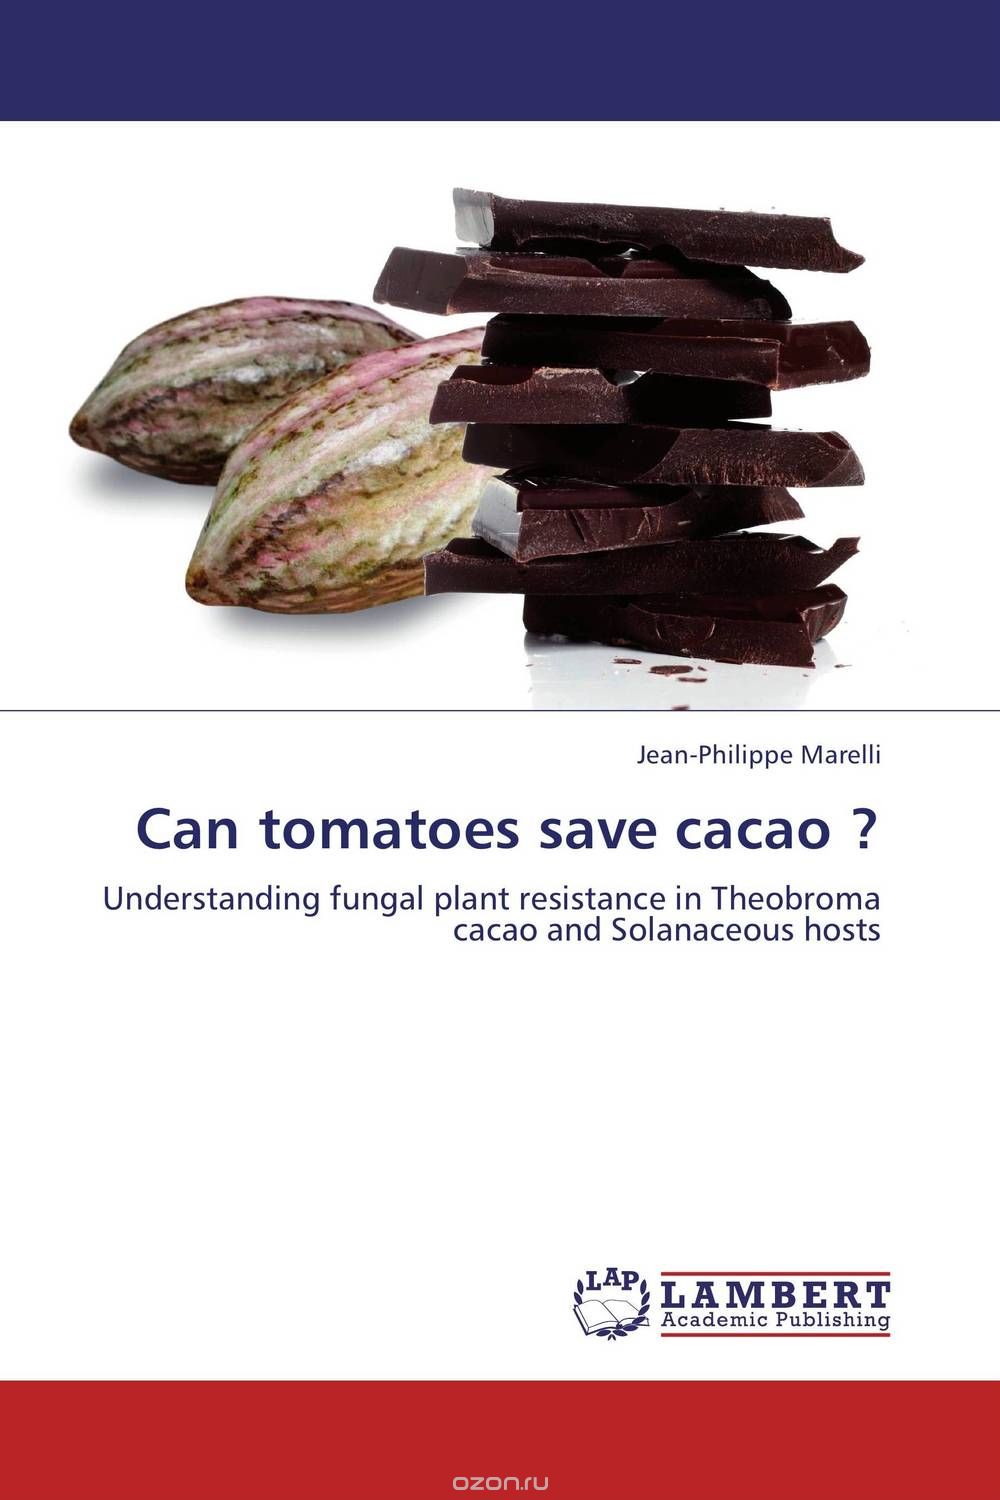 Скачать книгу "Can tomatoes save cacao ?"